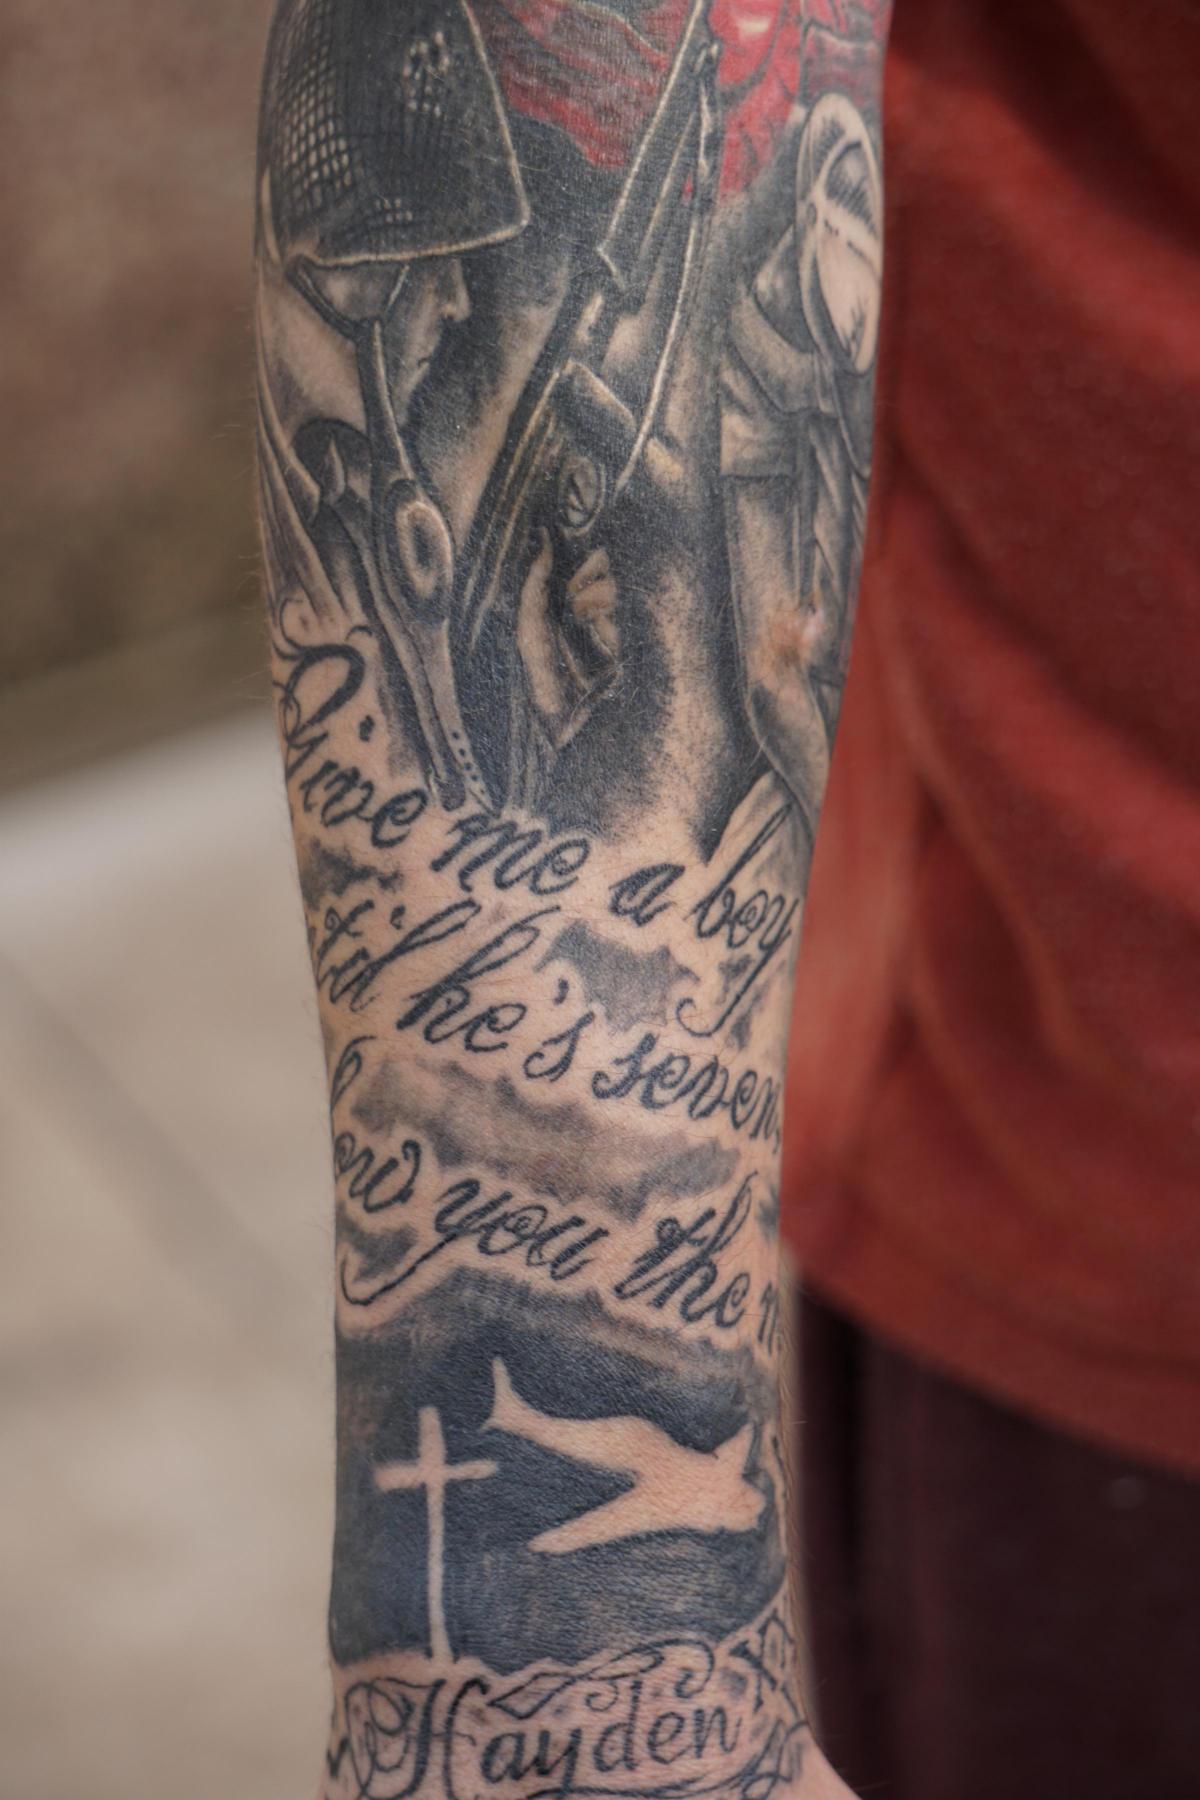 Elliott Morris, of Padiham, gets sleeve tattoo to celebrate First World War  anniversary | Lancashire Telegraph